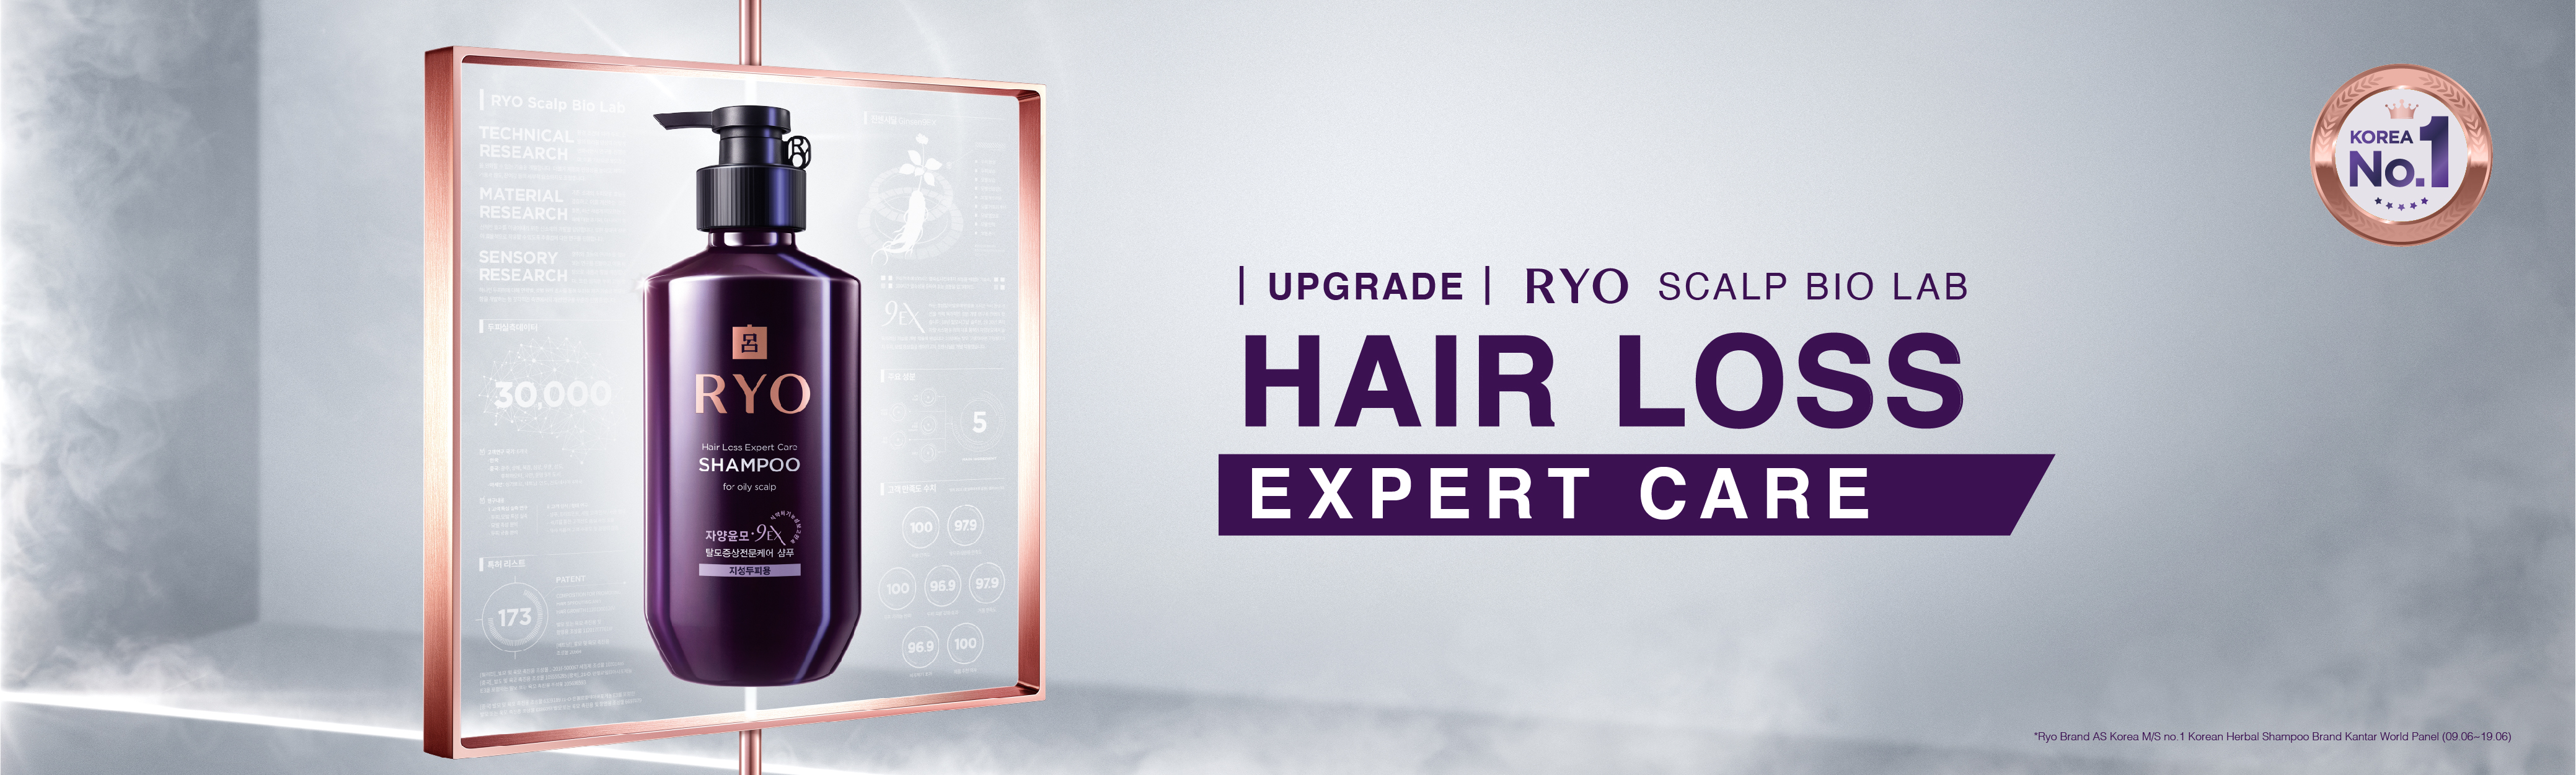 UPGRADE RYO SCALP BIO LAP HAIR LOSS EXPERT CARE